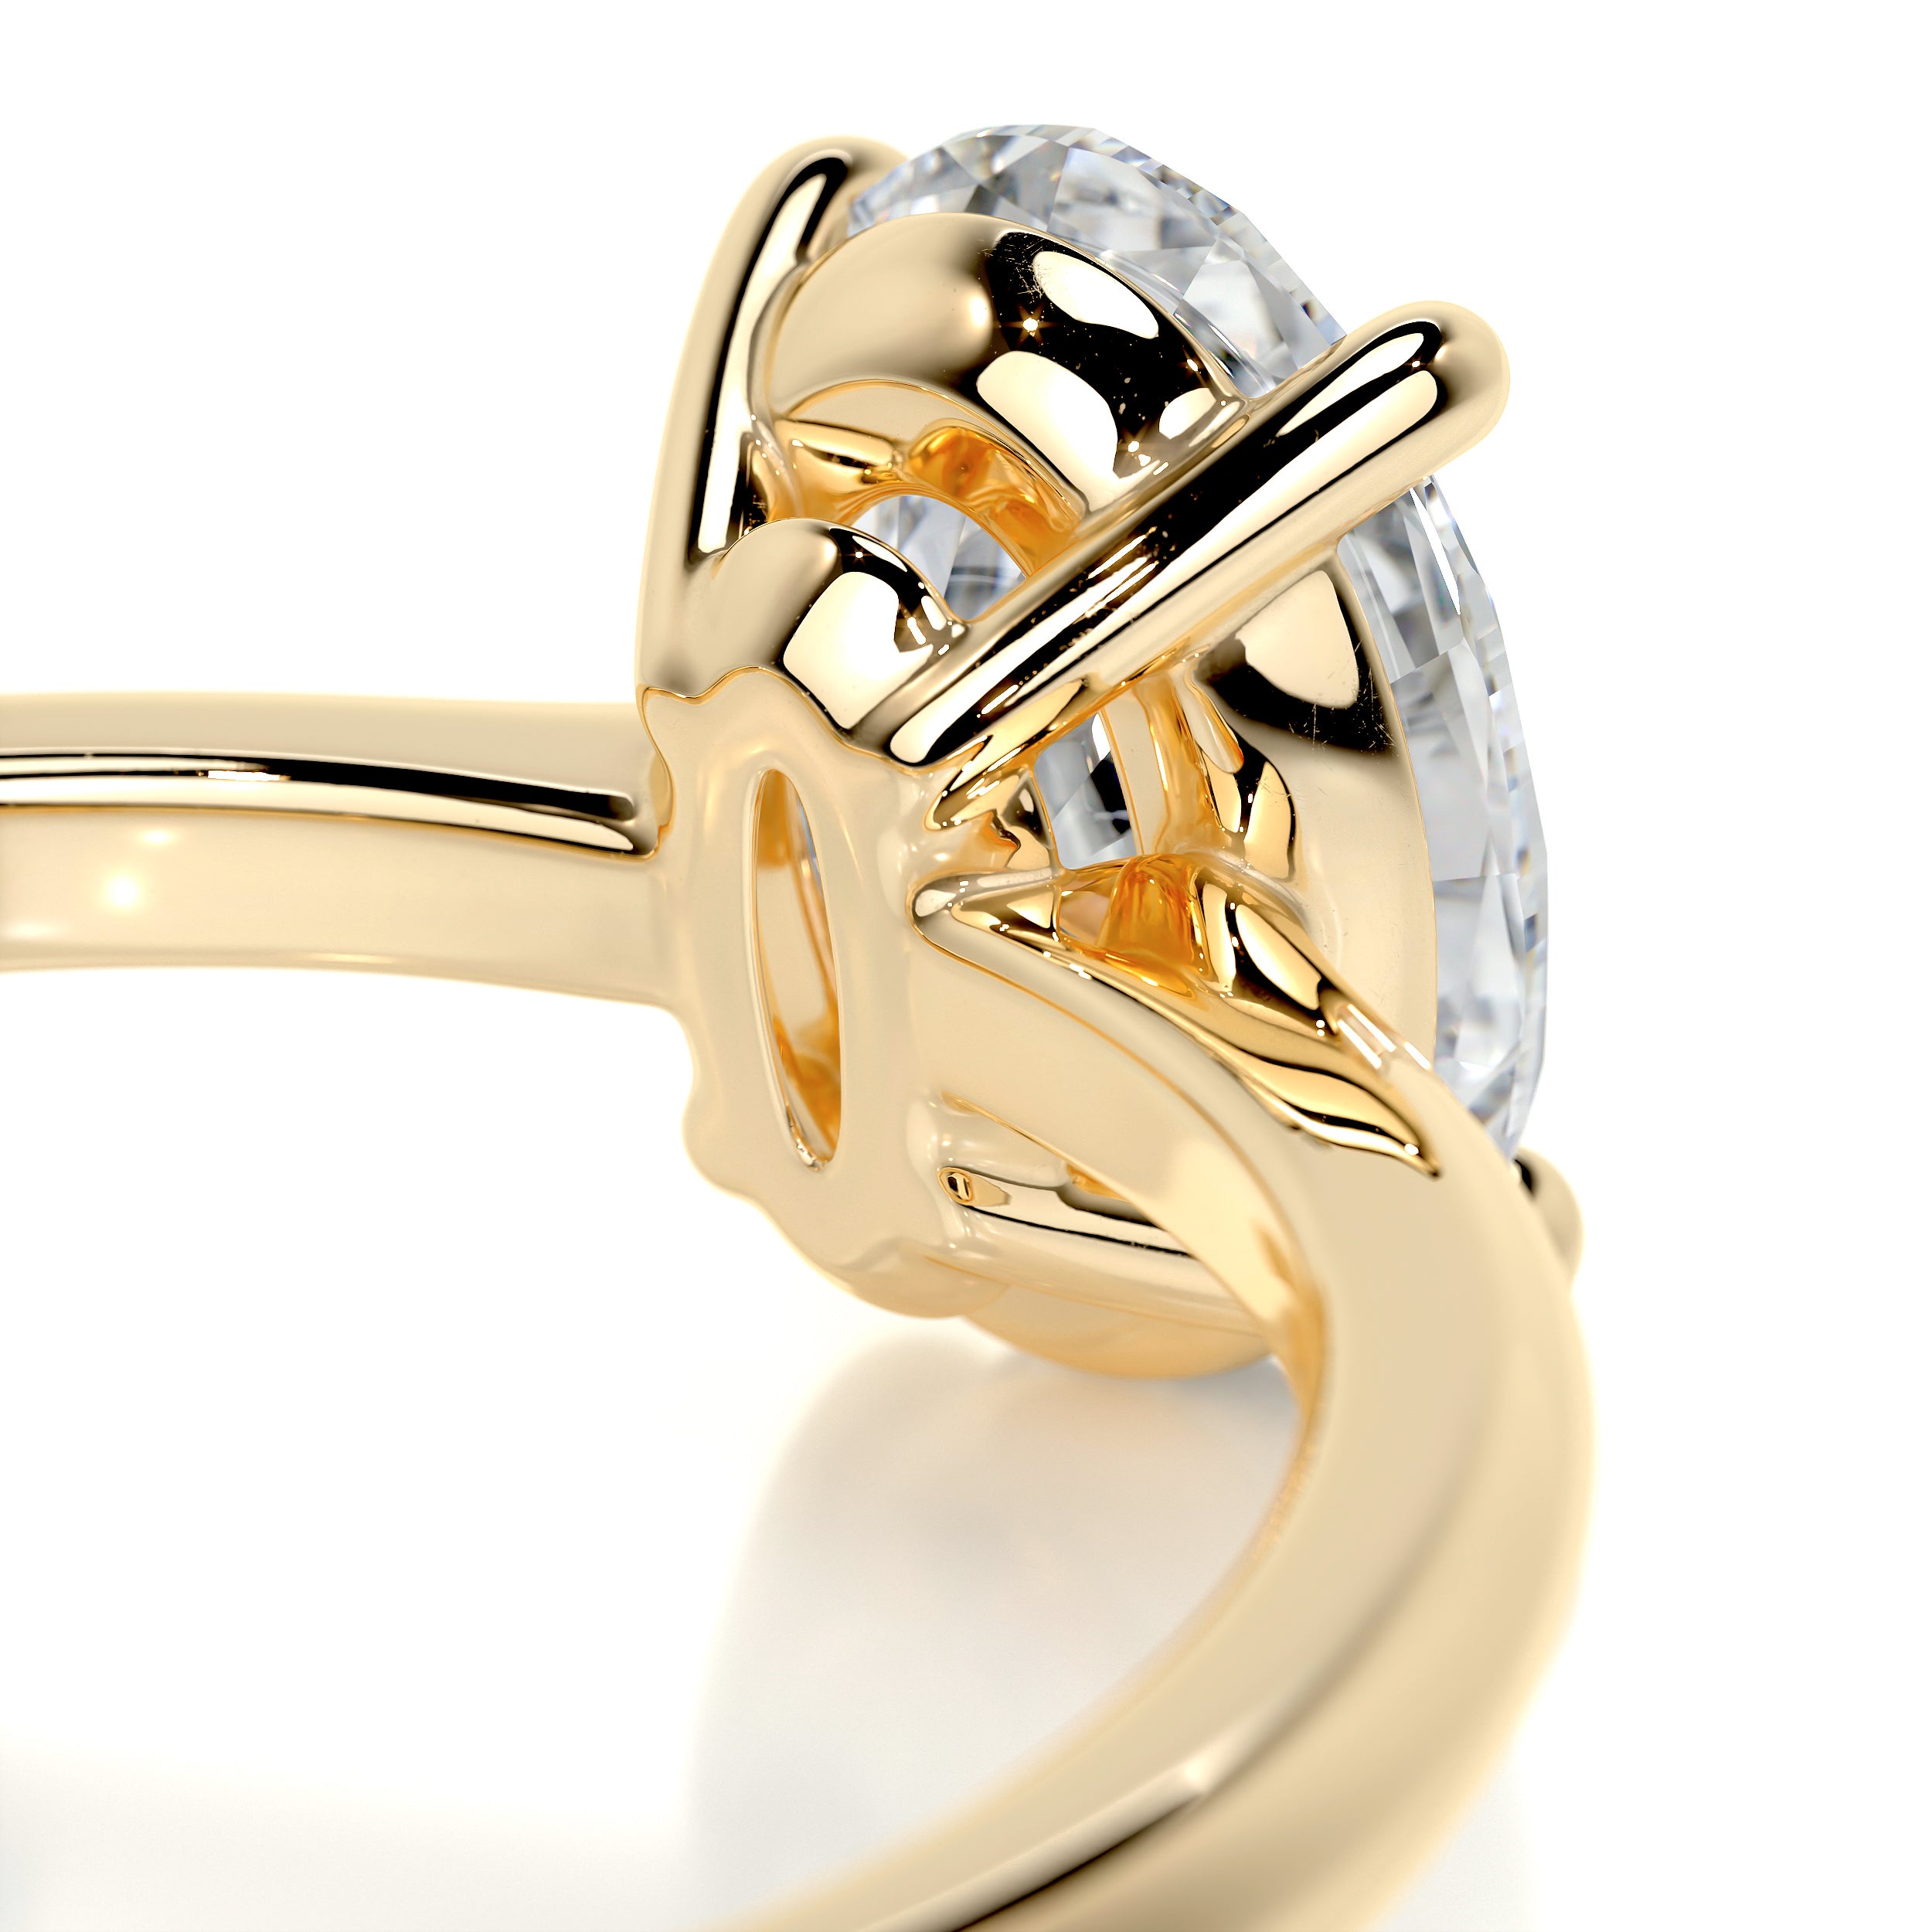 Julia Diamond Engagement Ring -18K Yellow Gold